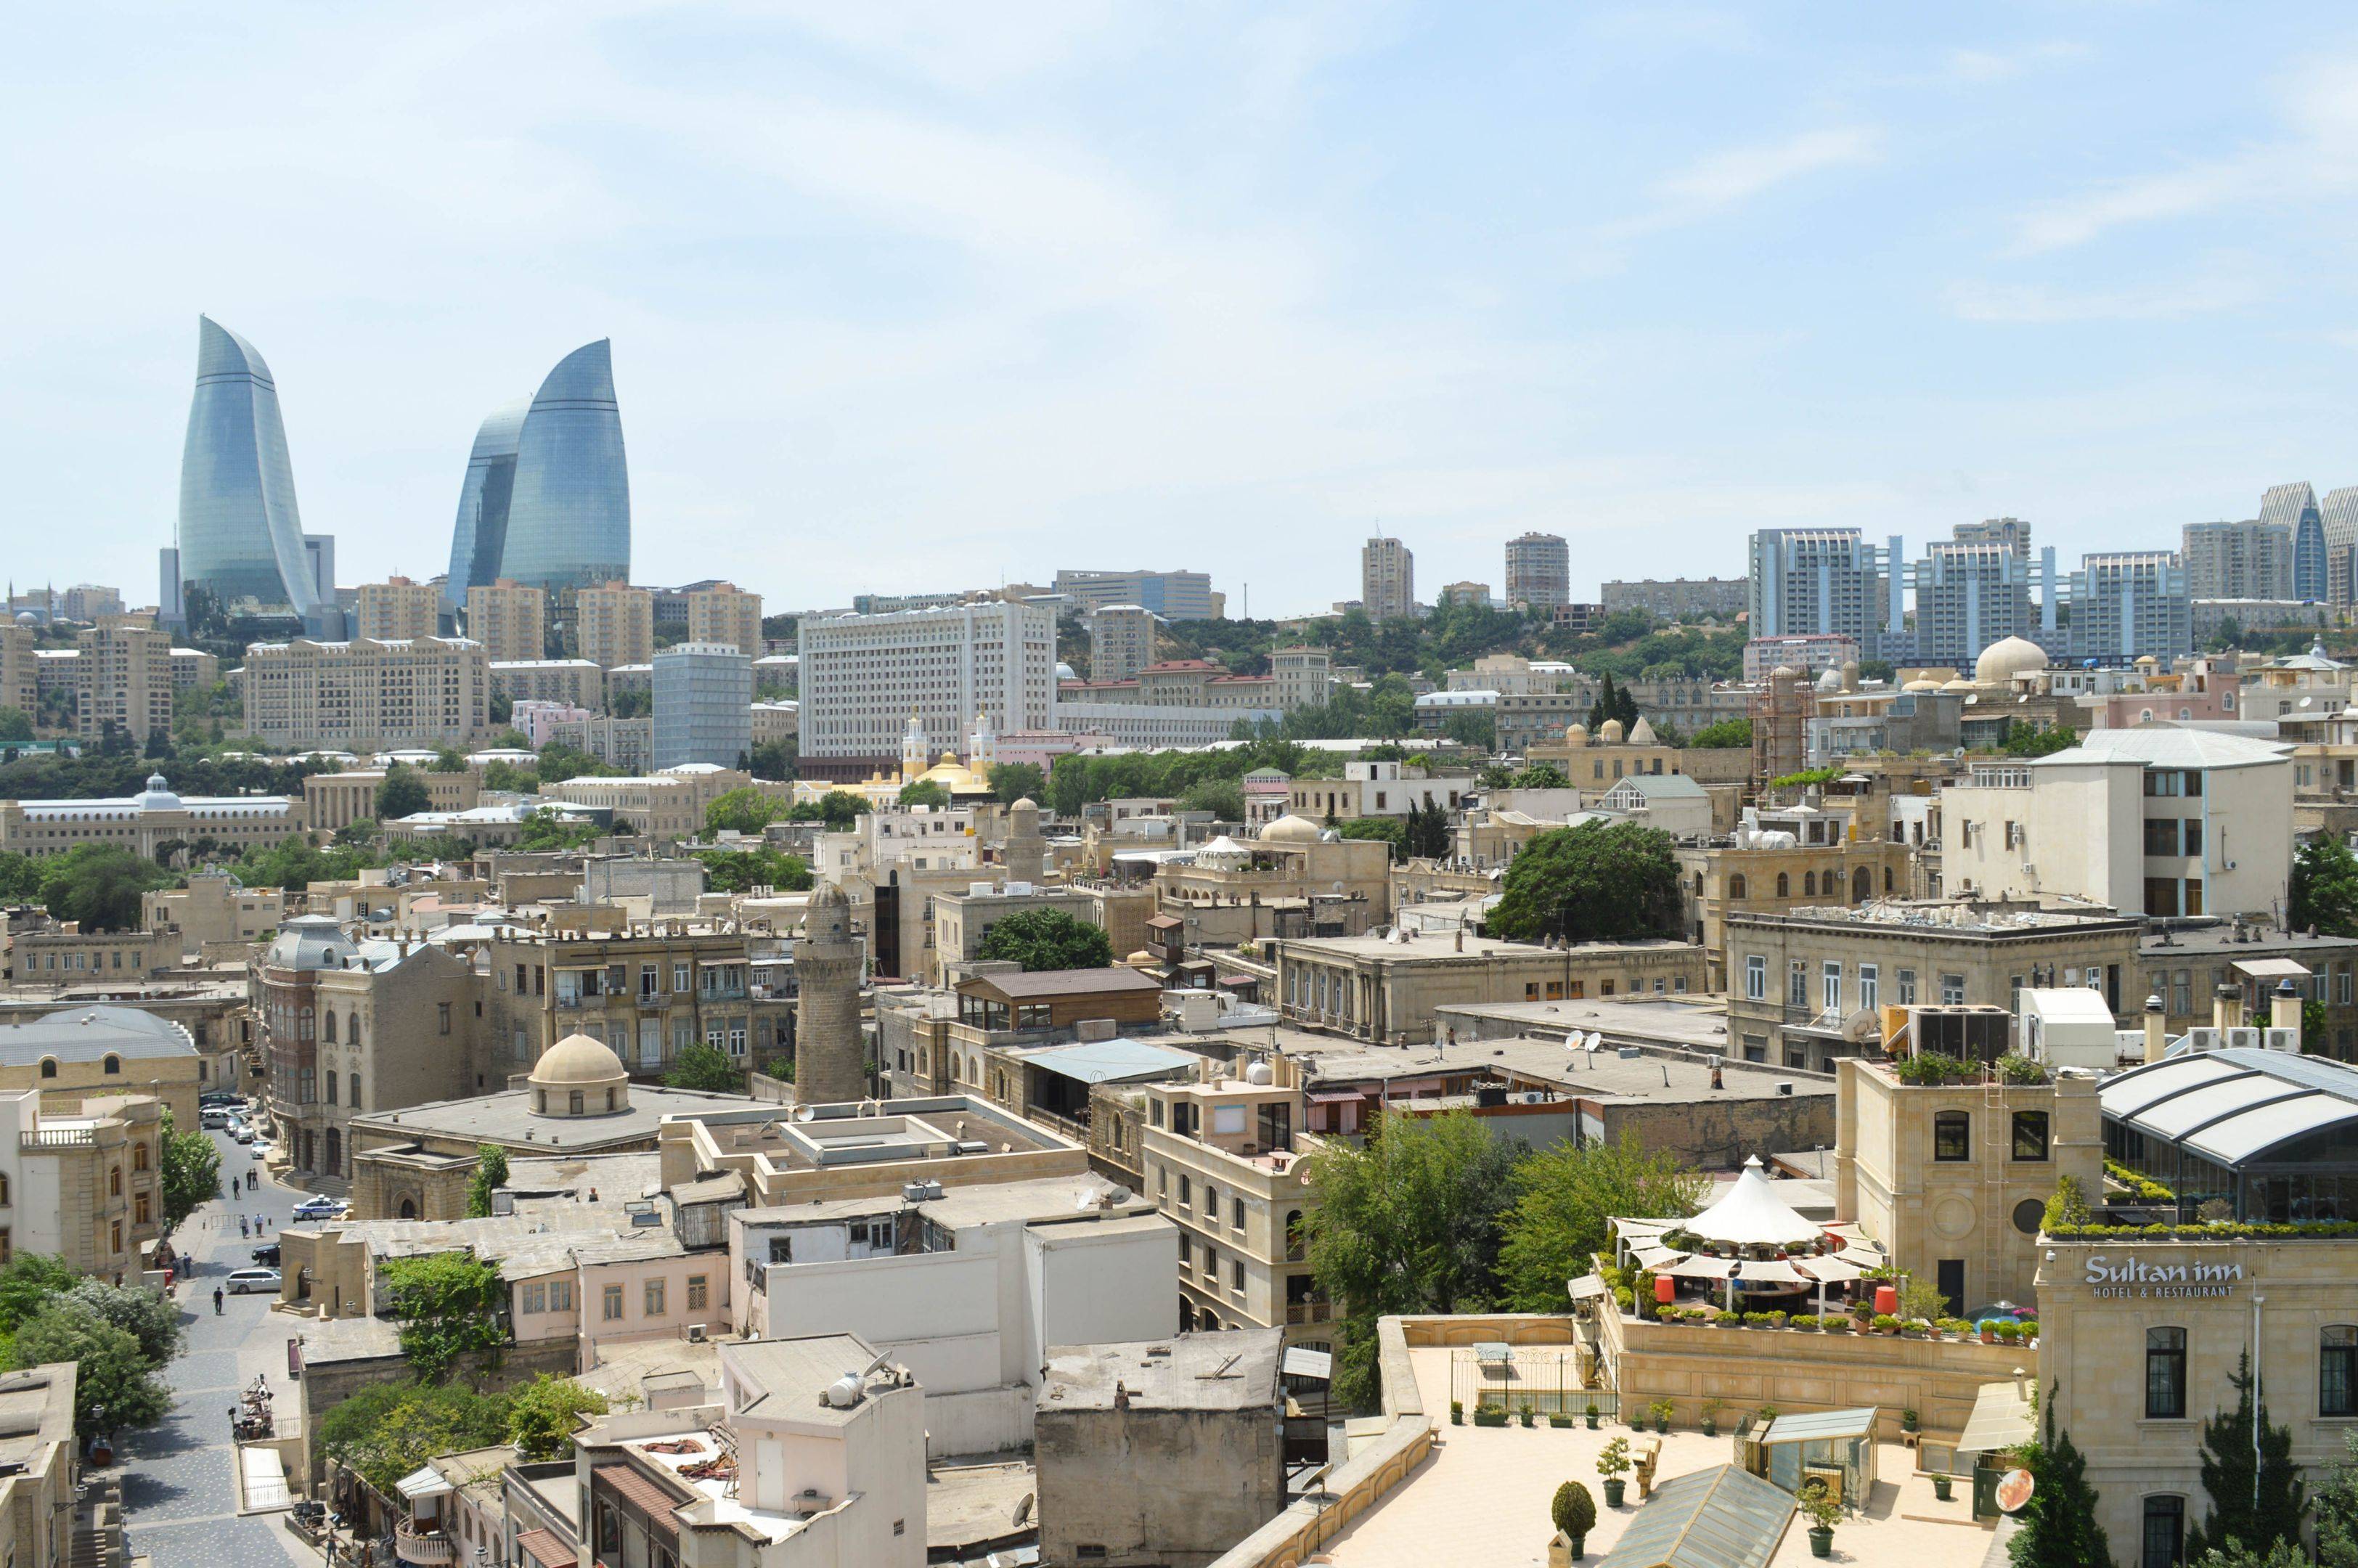 Visita dei monumenti storici a Baku